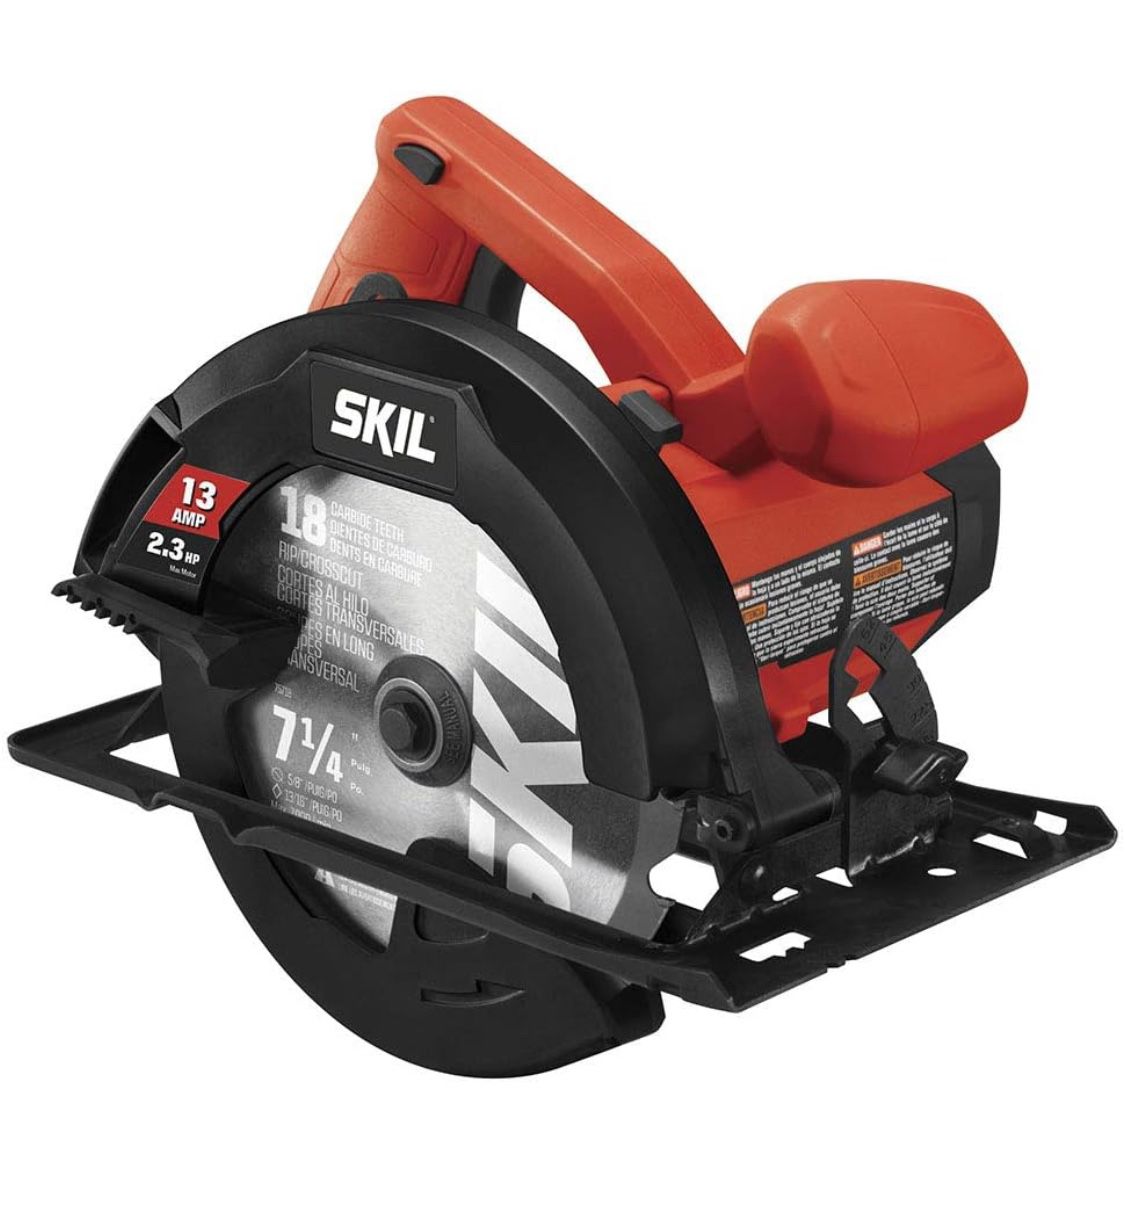 Skil - Circular saw